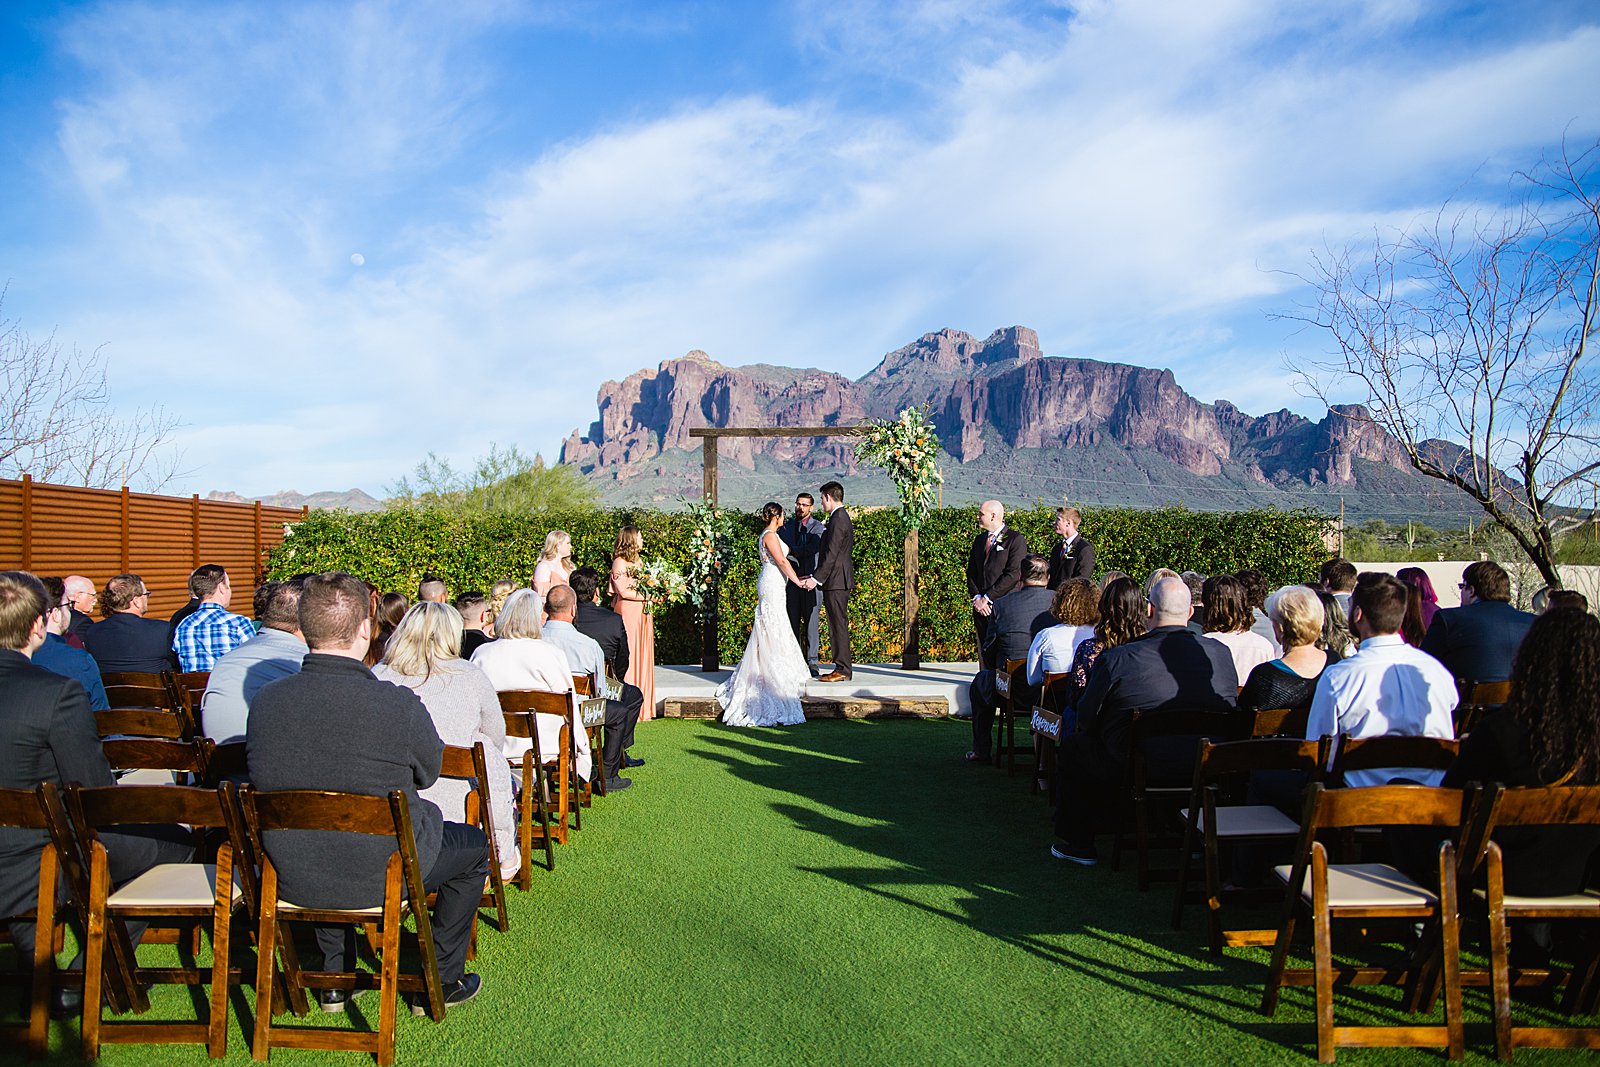 Wedding ceremony at The Paseo by Phoenix wedding photographer PMA Photography.